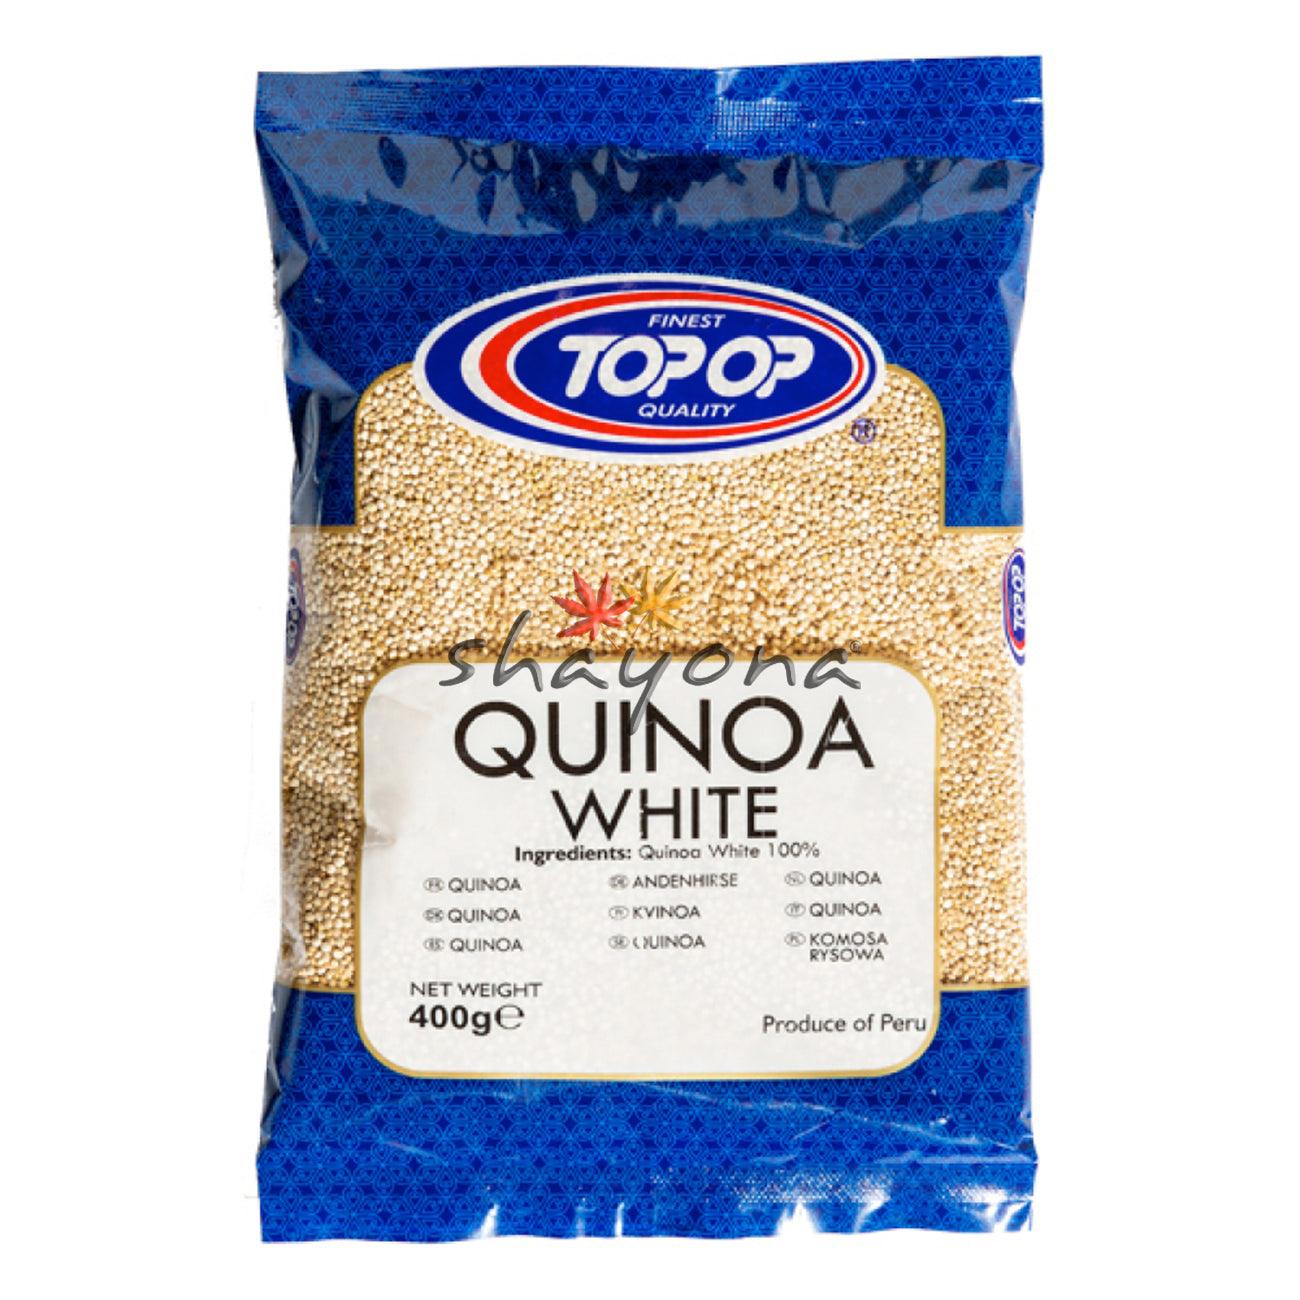 TopOp Quinoa White - Shayona UK